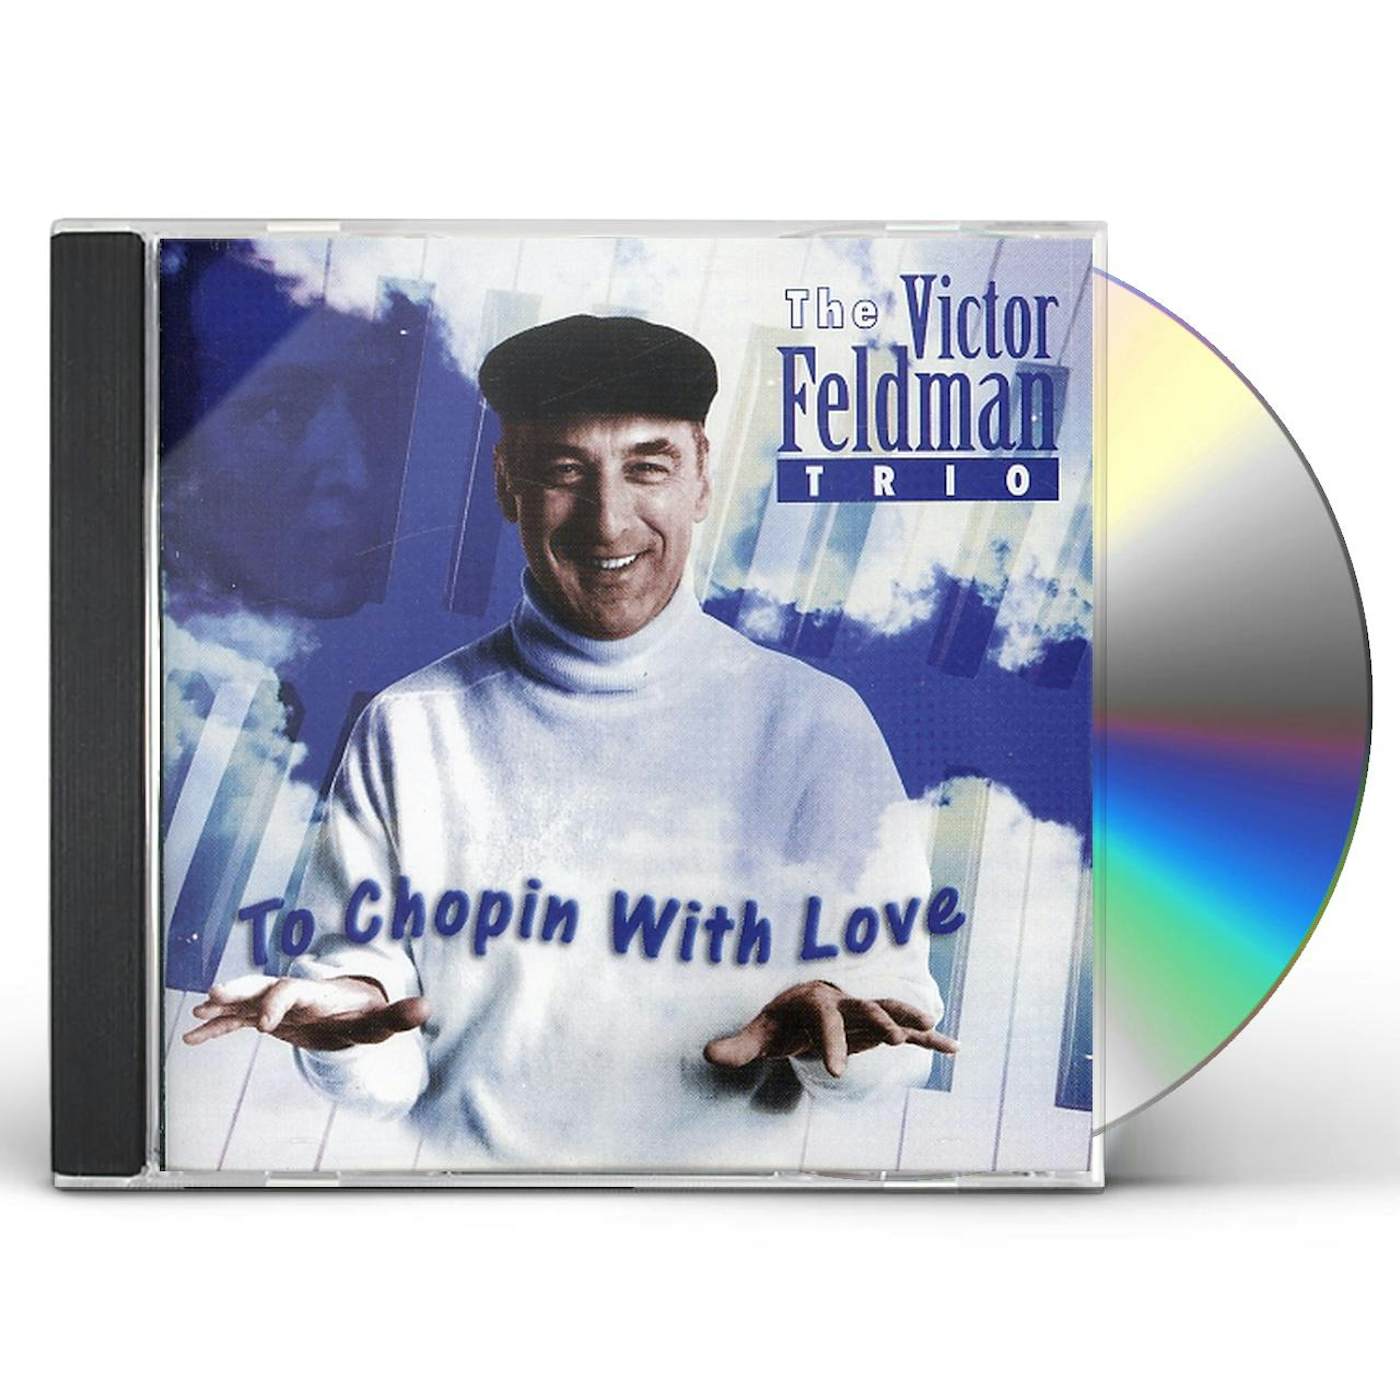 Victor Feldman TO CHOPIN WITH LOVE CD